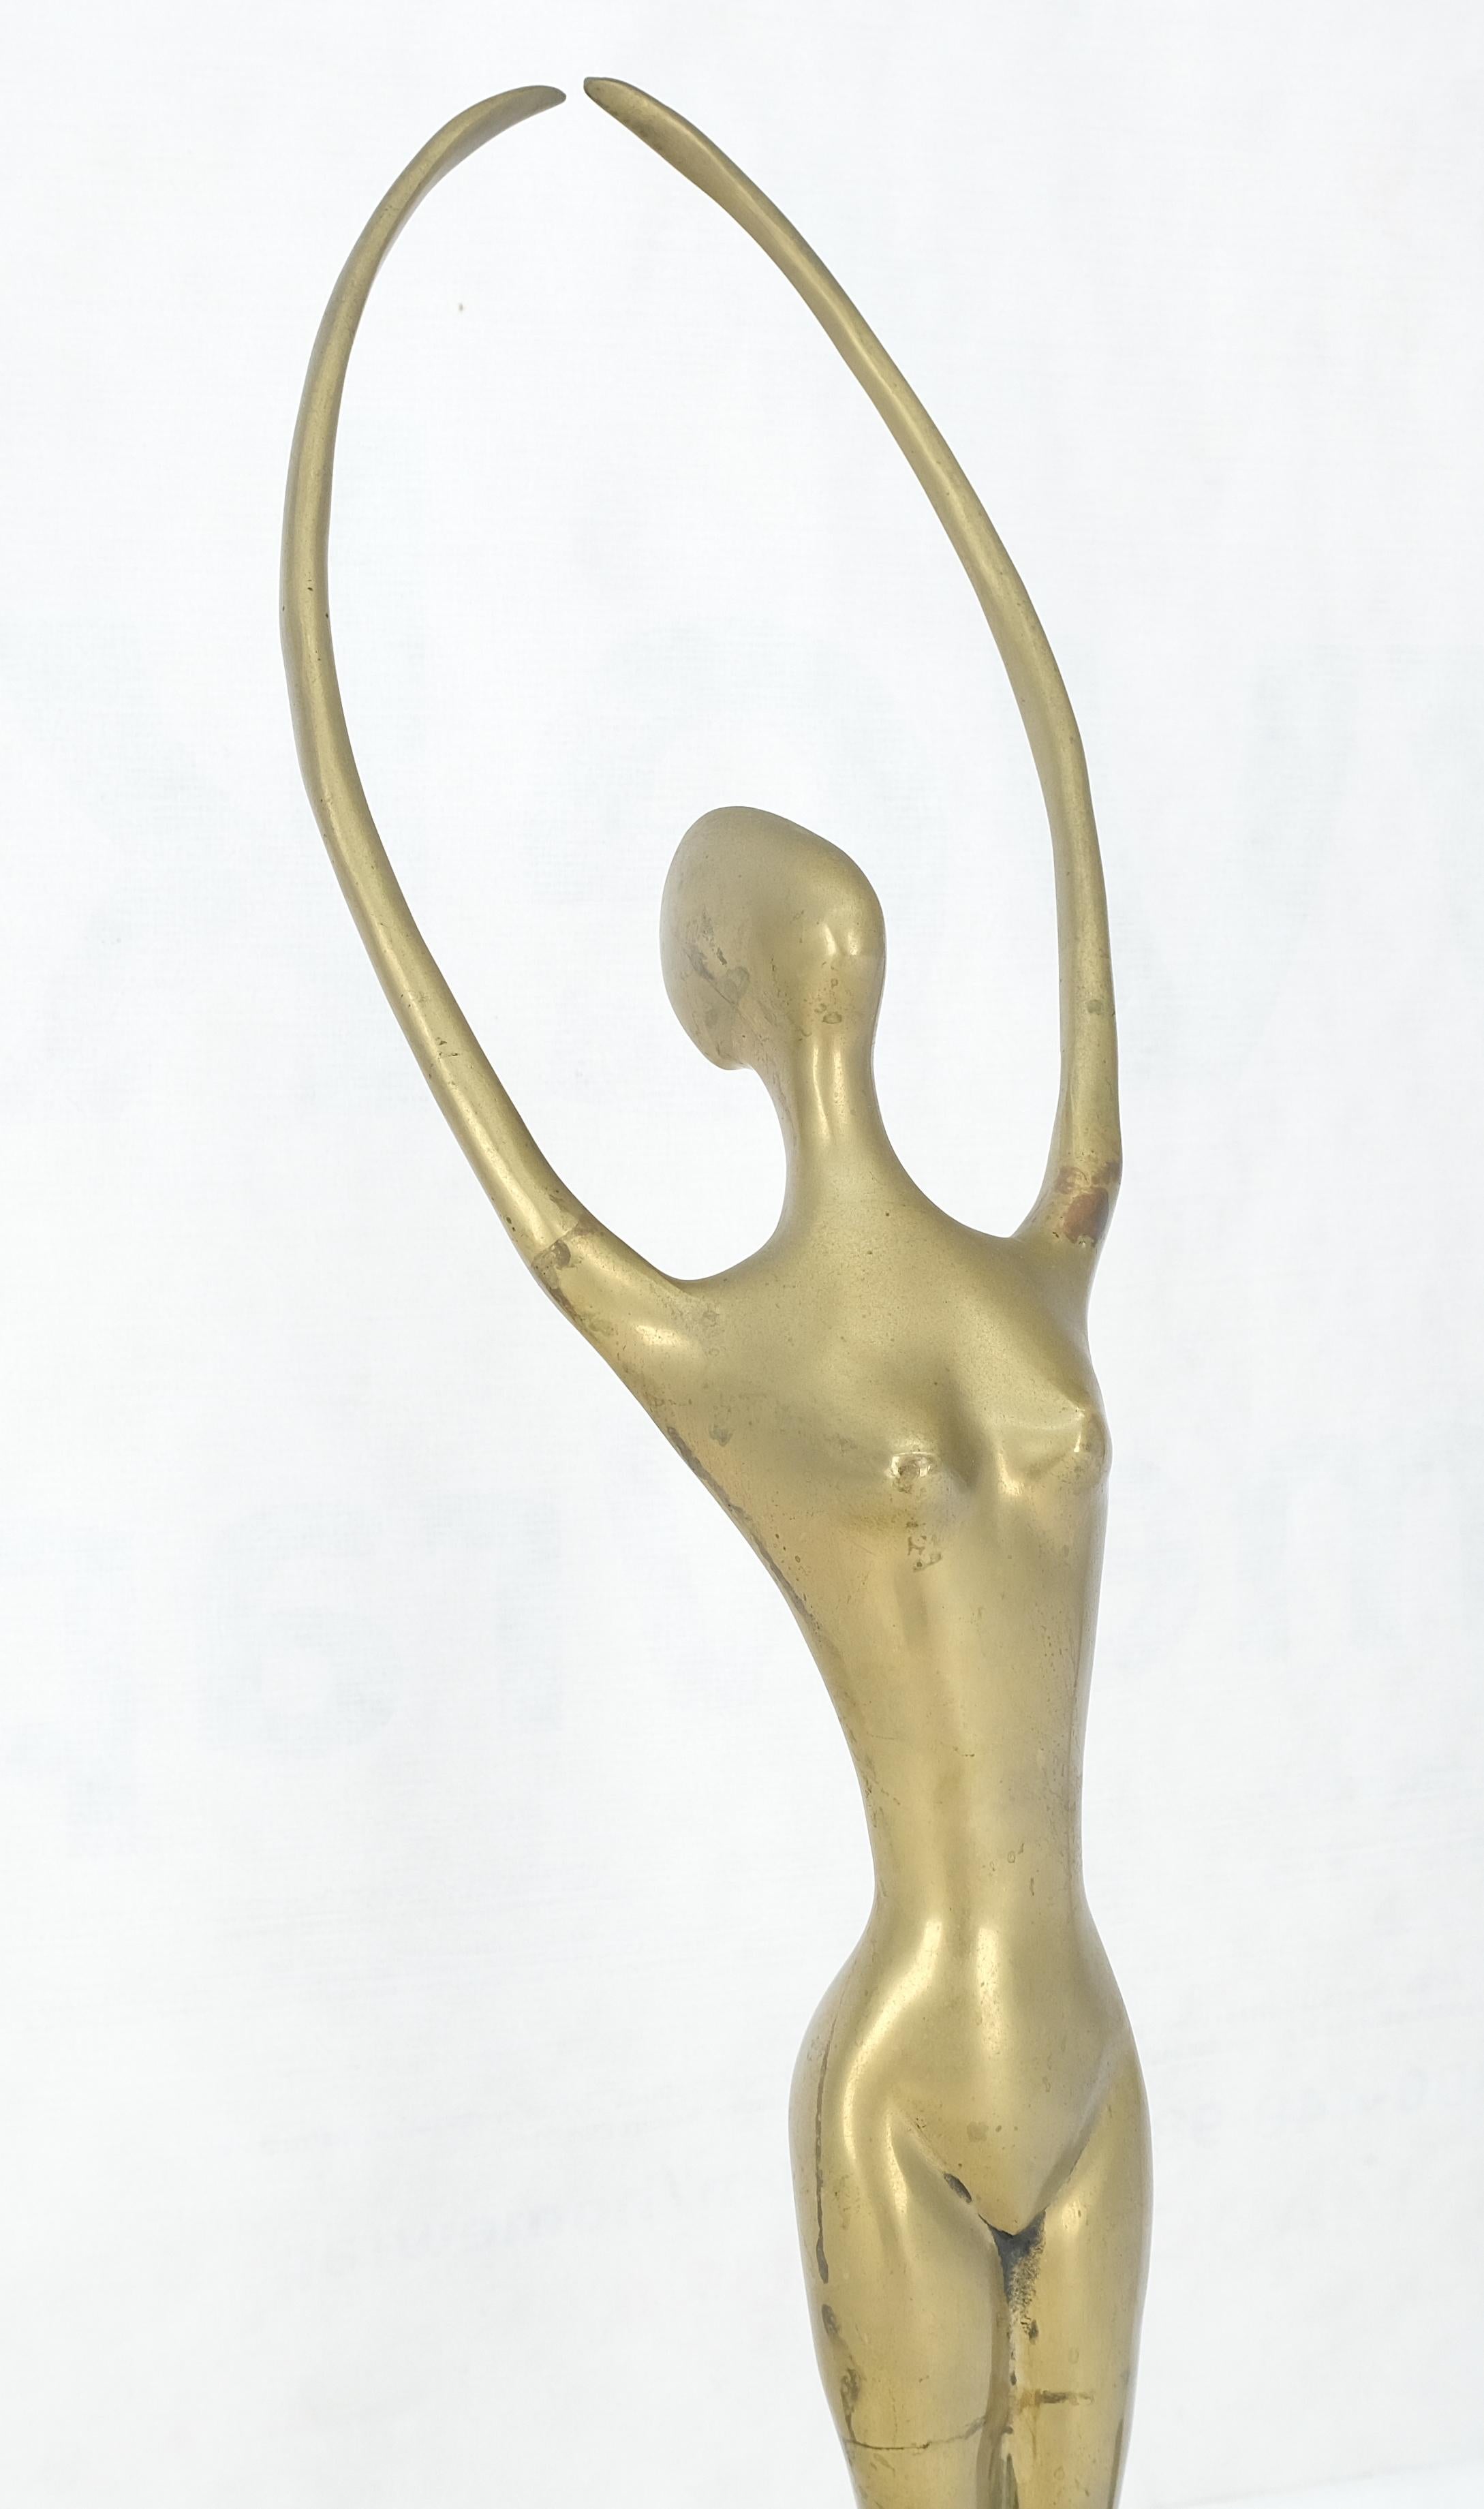 Pair of 3 Foot Tall Solid Brass Ballerina Dancers Sculptures Figurines Statue  In Good Condition For Sale In Rockaway, NJ